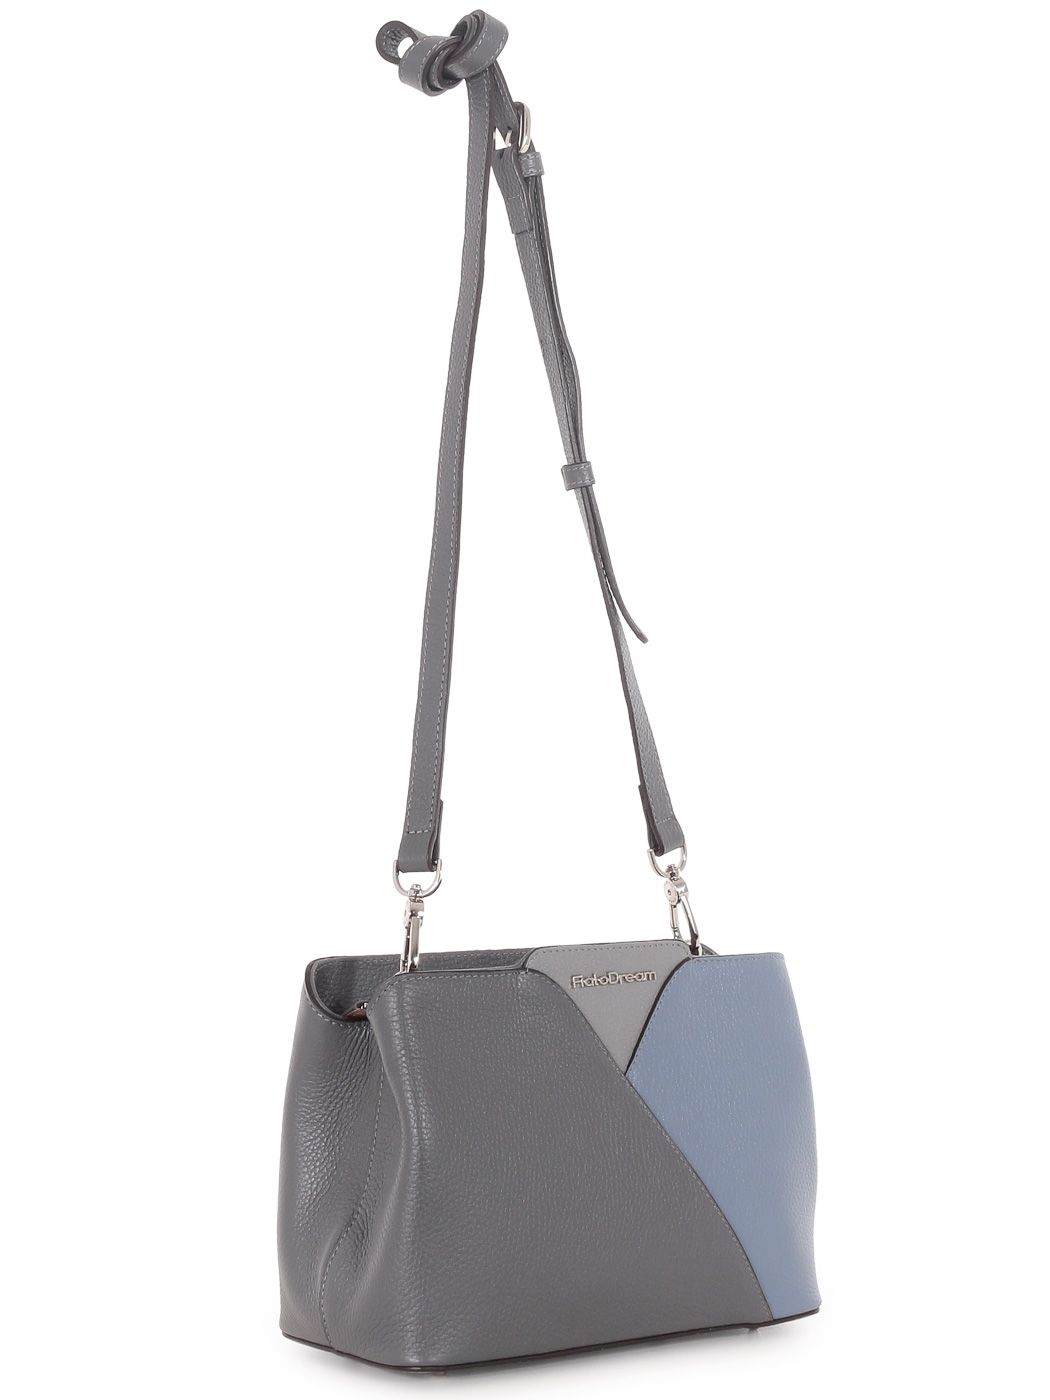 11290 FD мыш сумка жен. дем. натуральная кожа/текстиль серый; голубой Fiato Dream